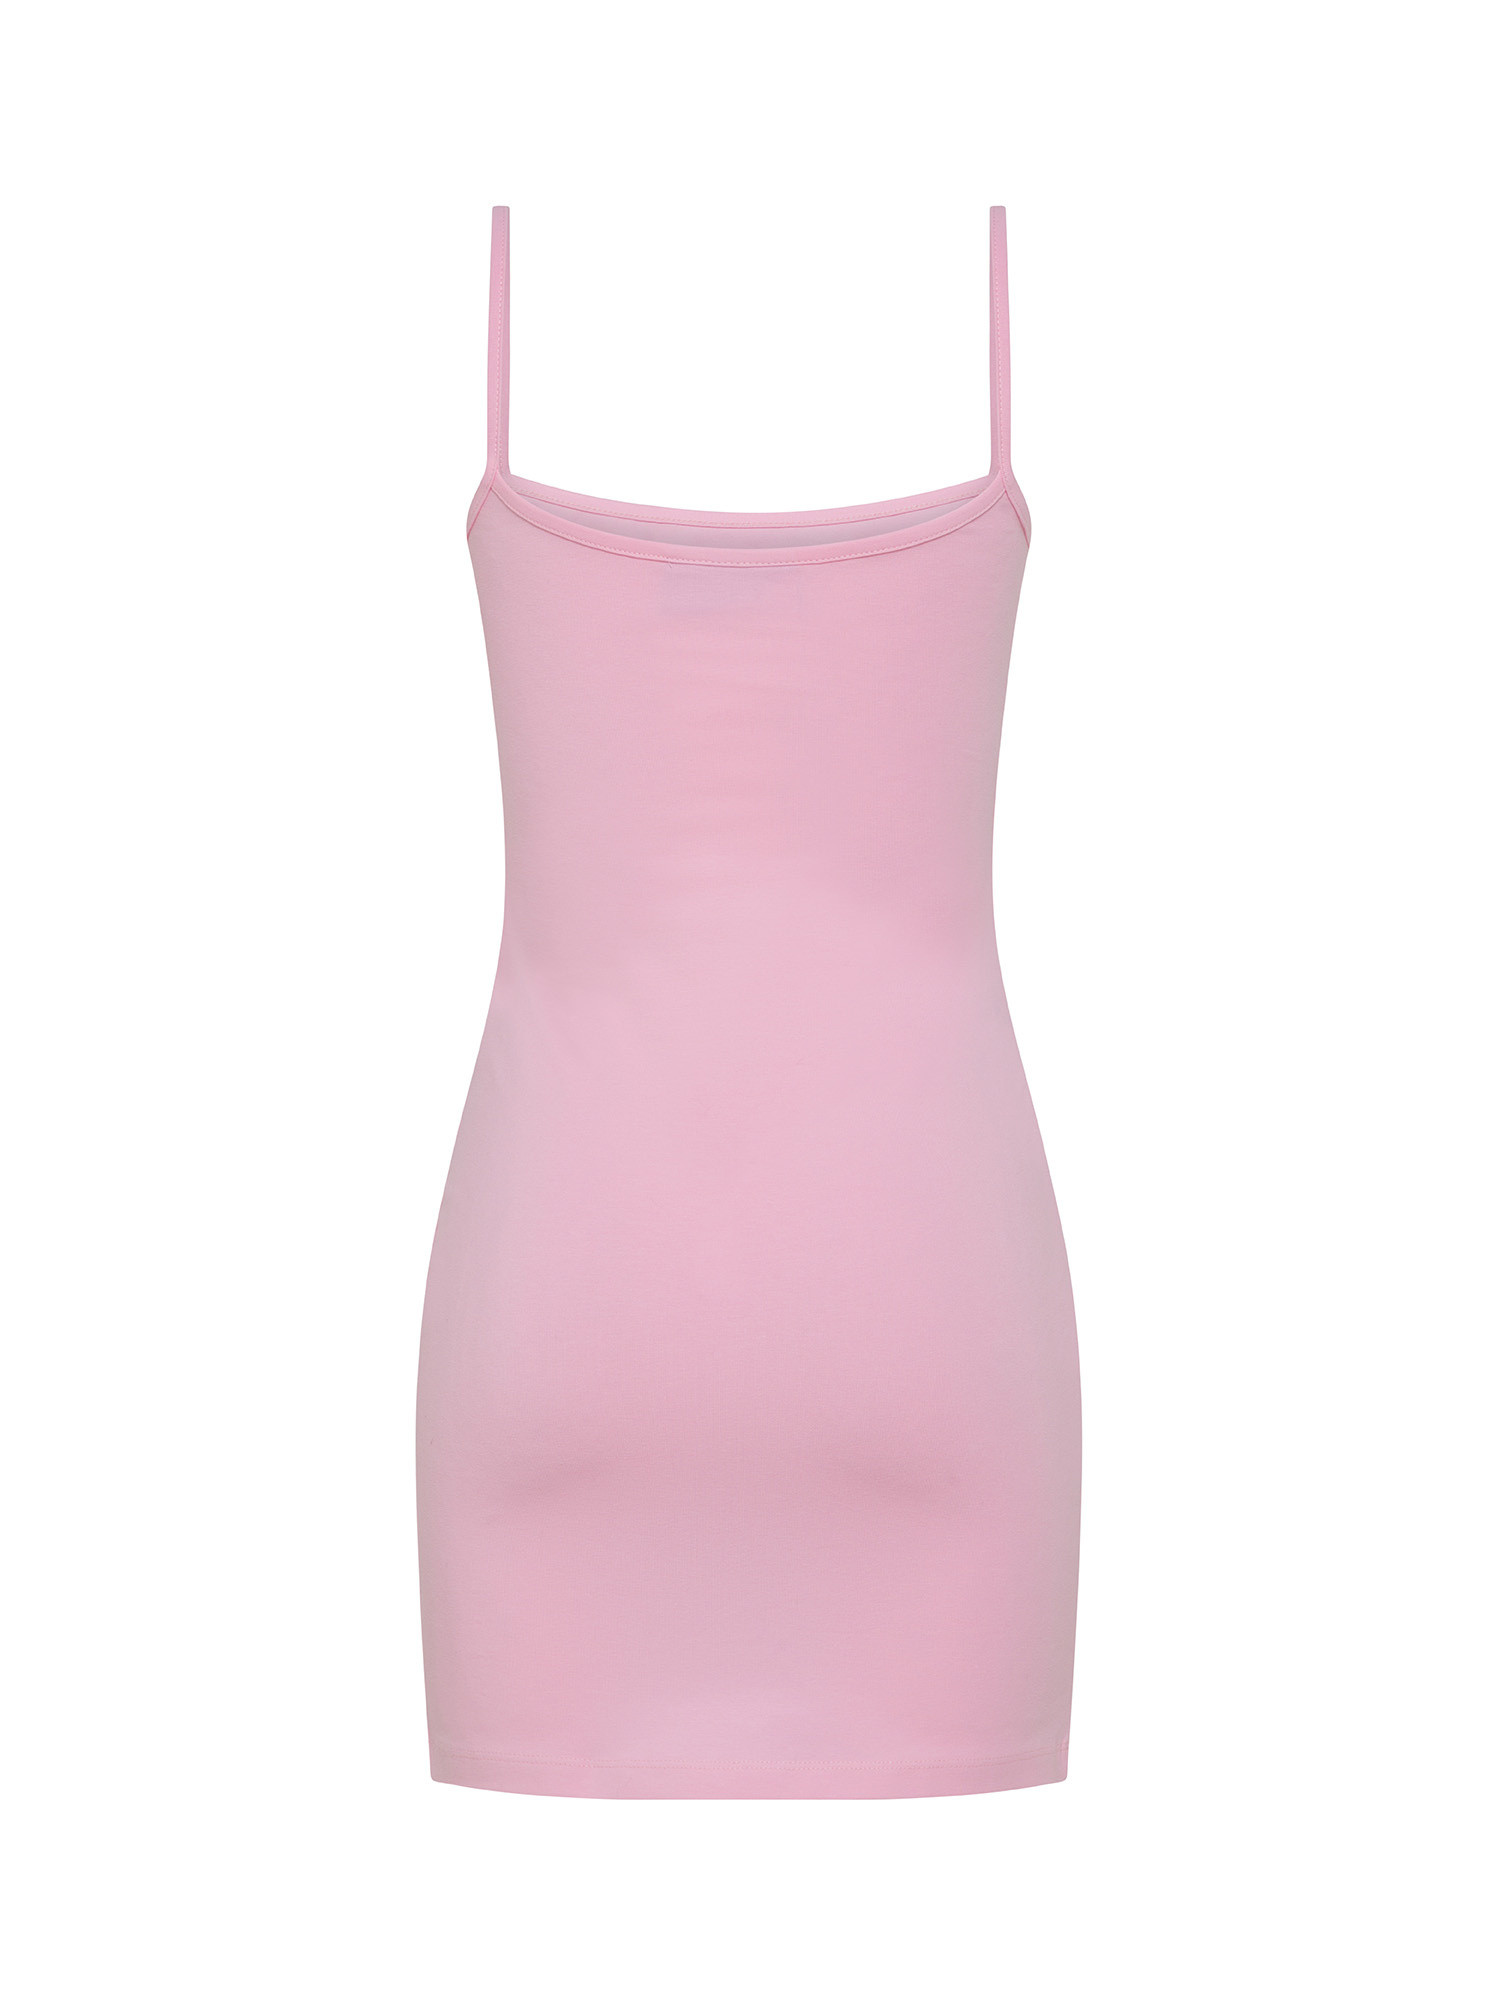 Chiara Ferragni - Dress with shoulder pads and logo print, Pink, large image number 1